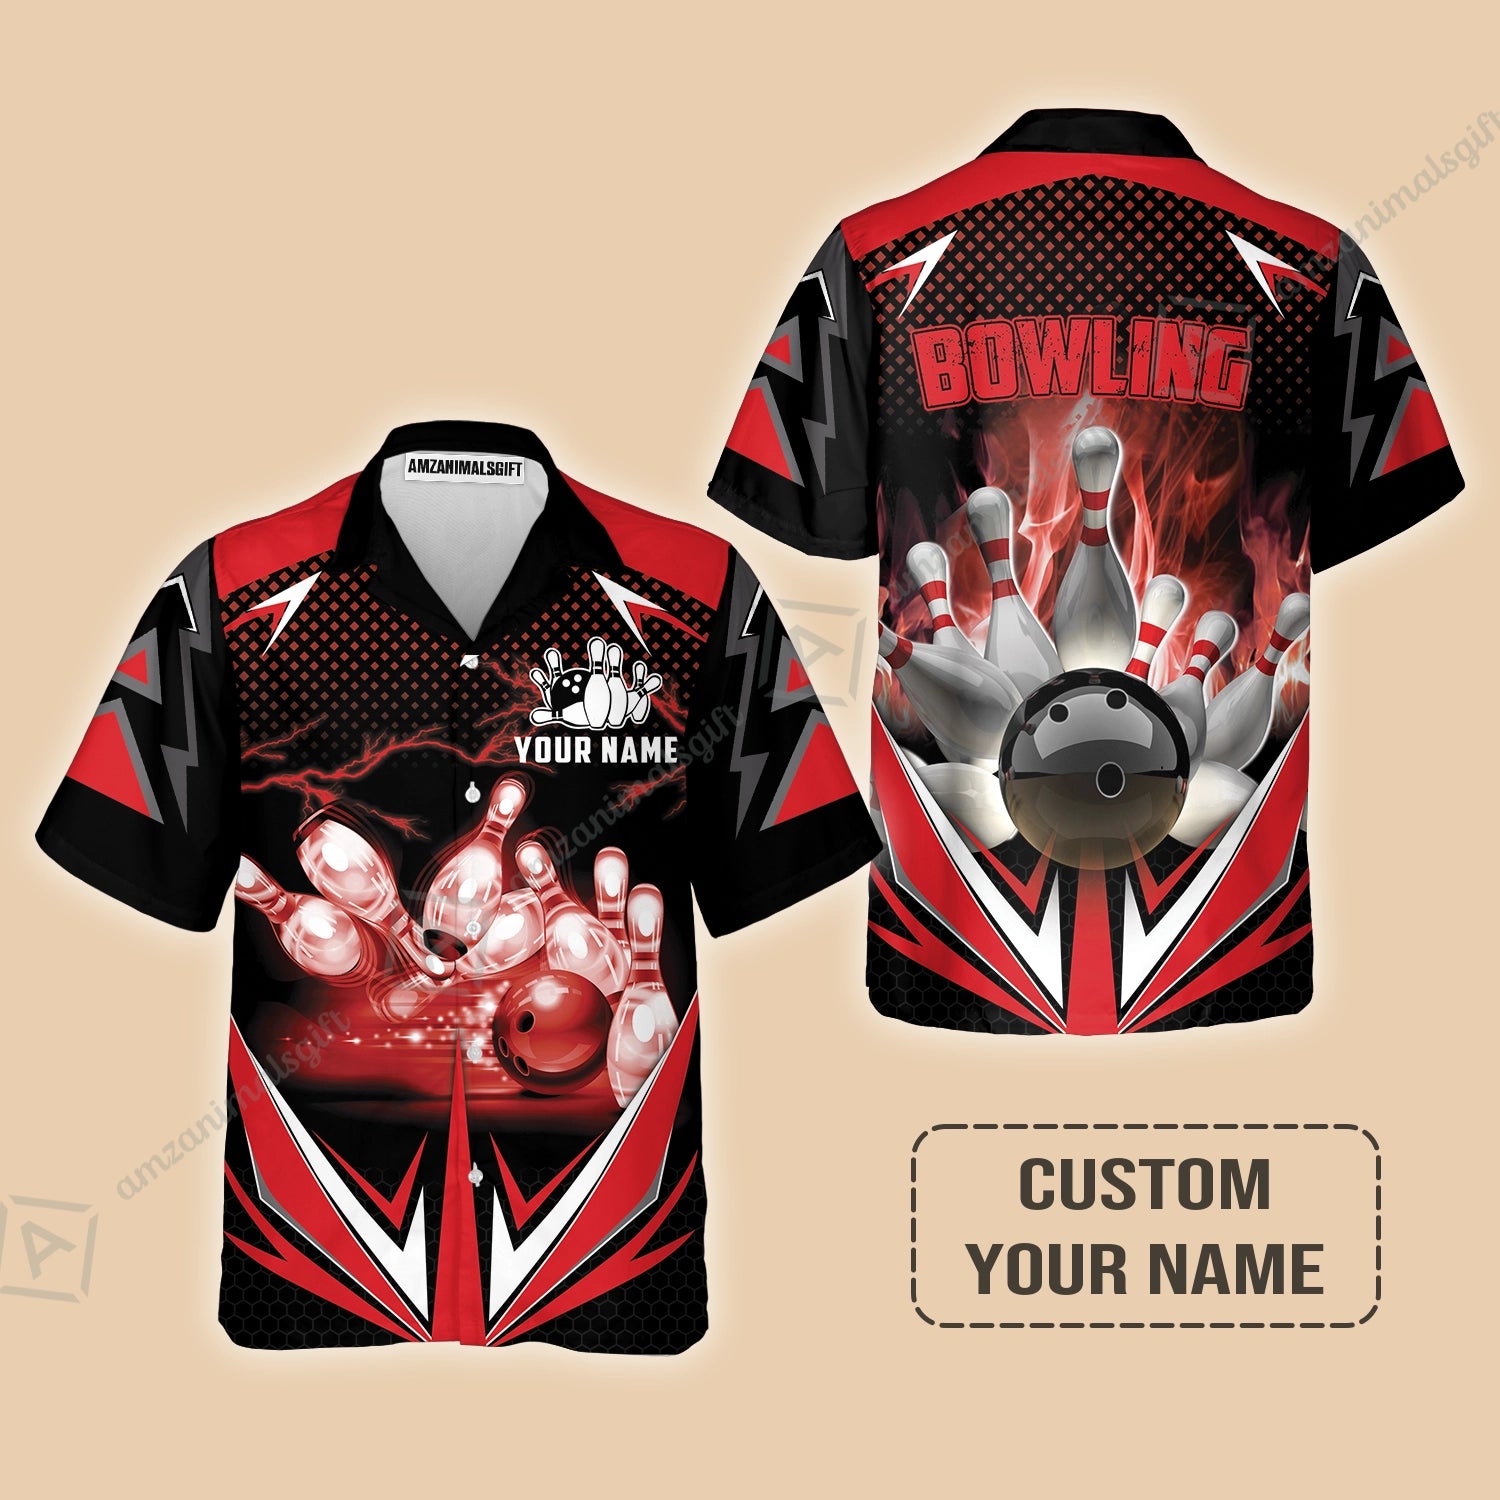 Customized Bowling Red Fire Hawaiian Shirt For Bowling Players, Bowling Team Uniform Shirts, Gift For Men, Bowling Lovers, Bowlers